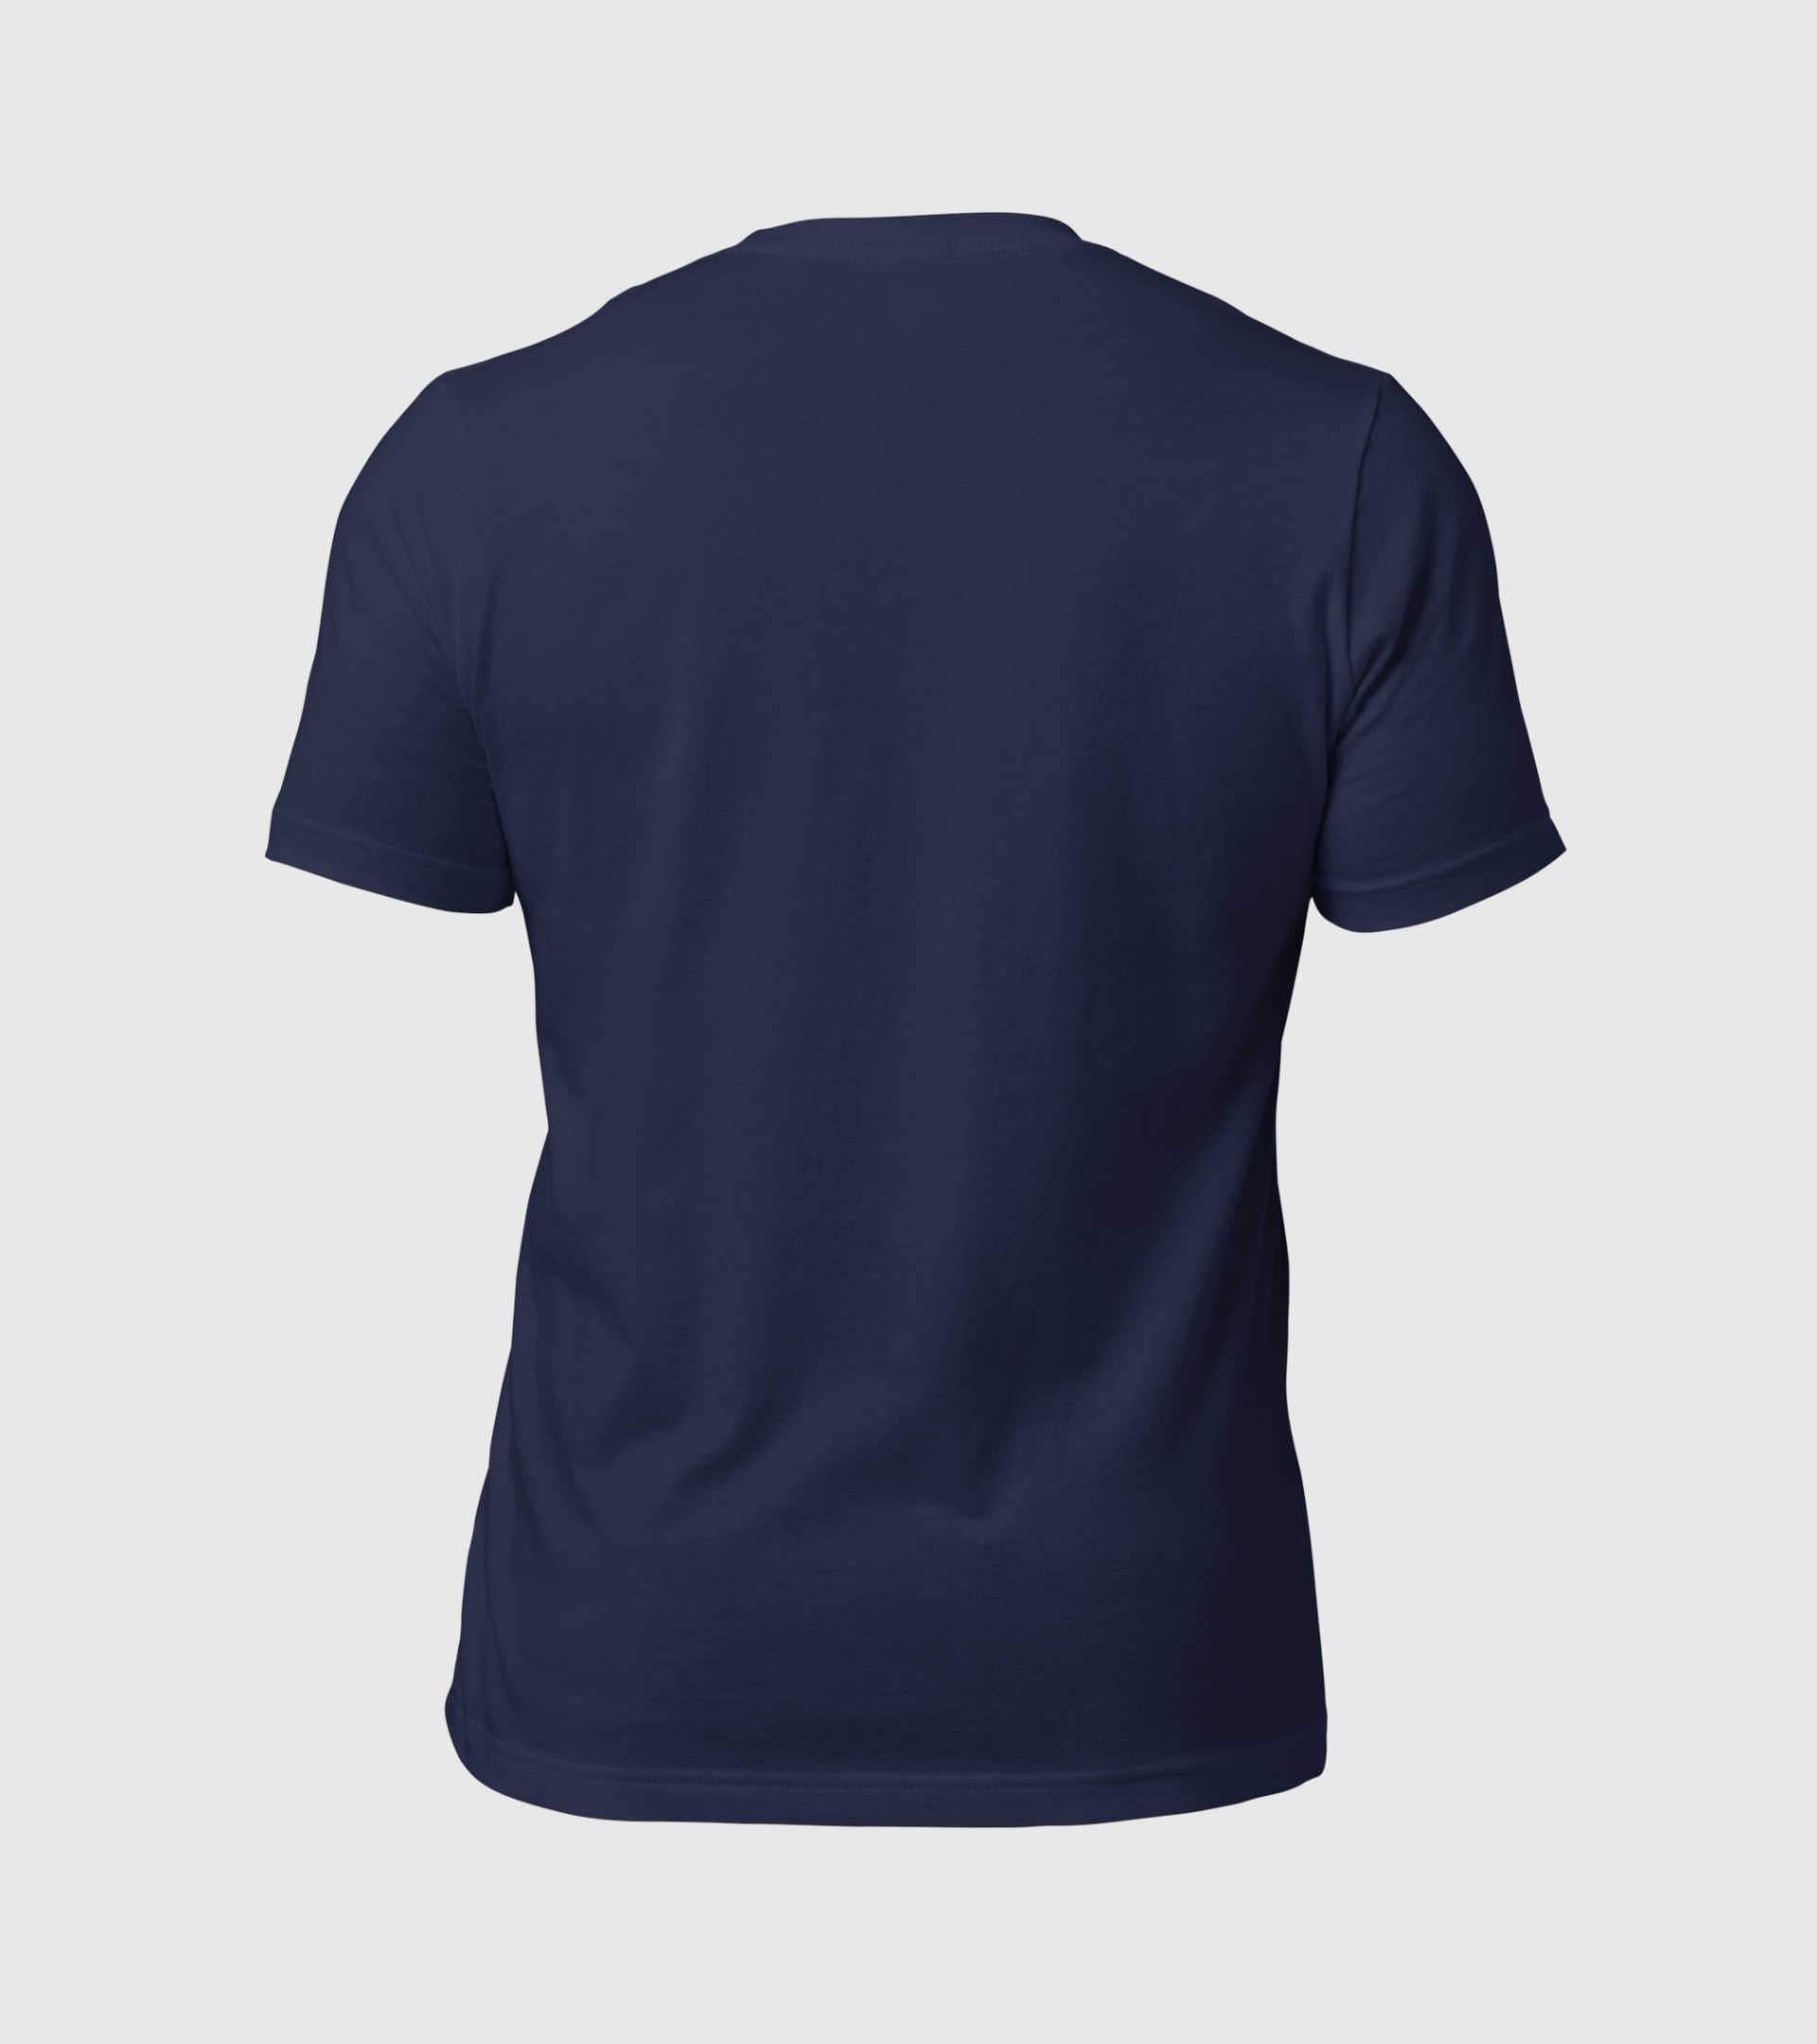 Men's MetCon Max Training T-Shirt